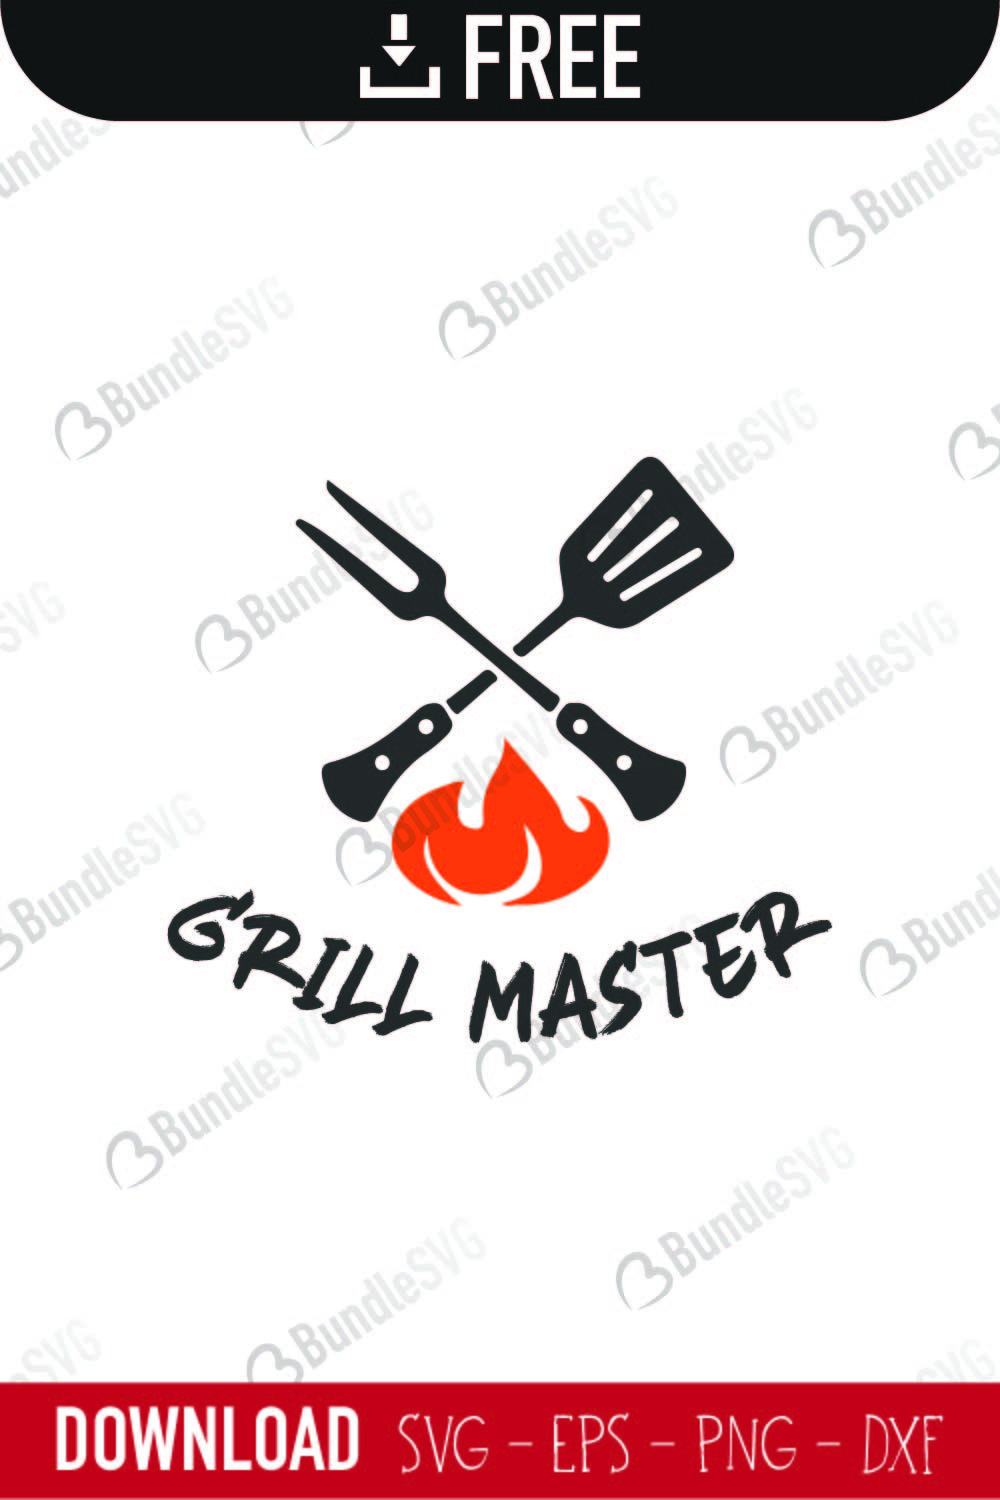 Download Grill Master Svg Cut Files Free Download Bundlesvg